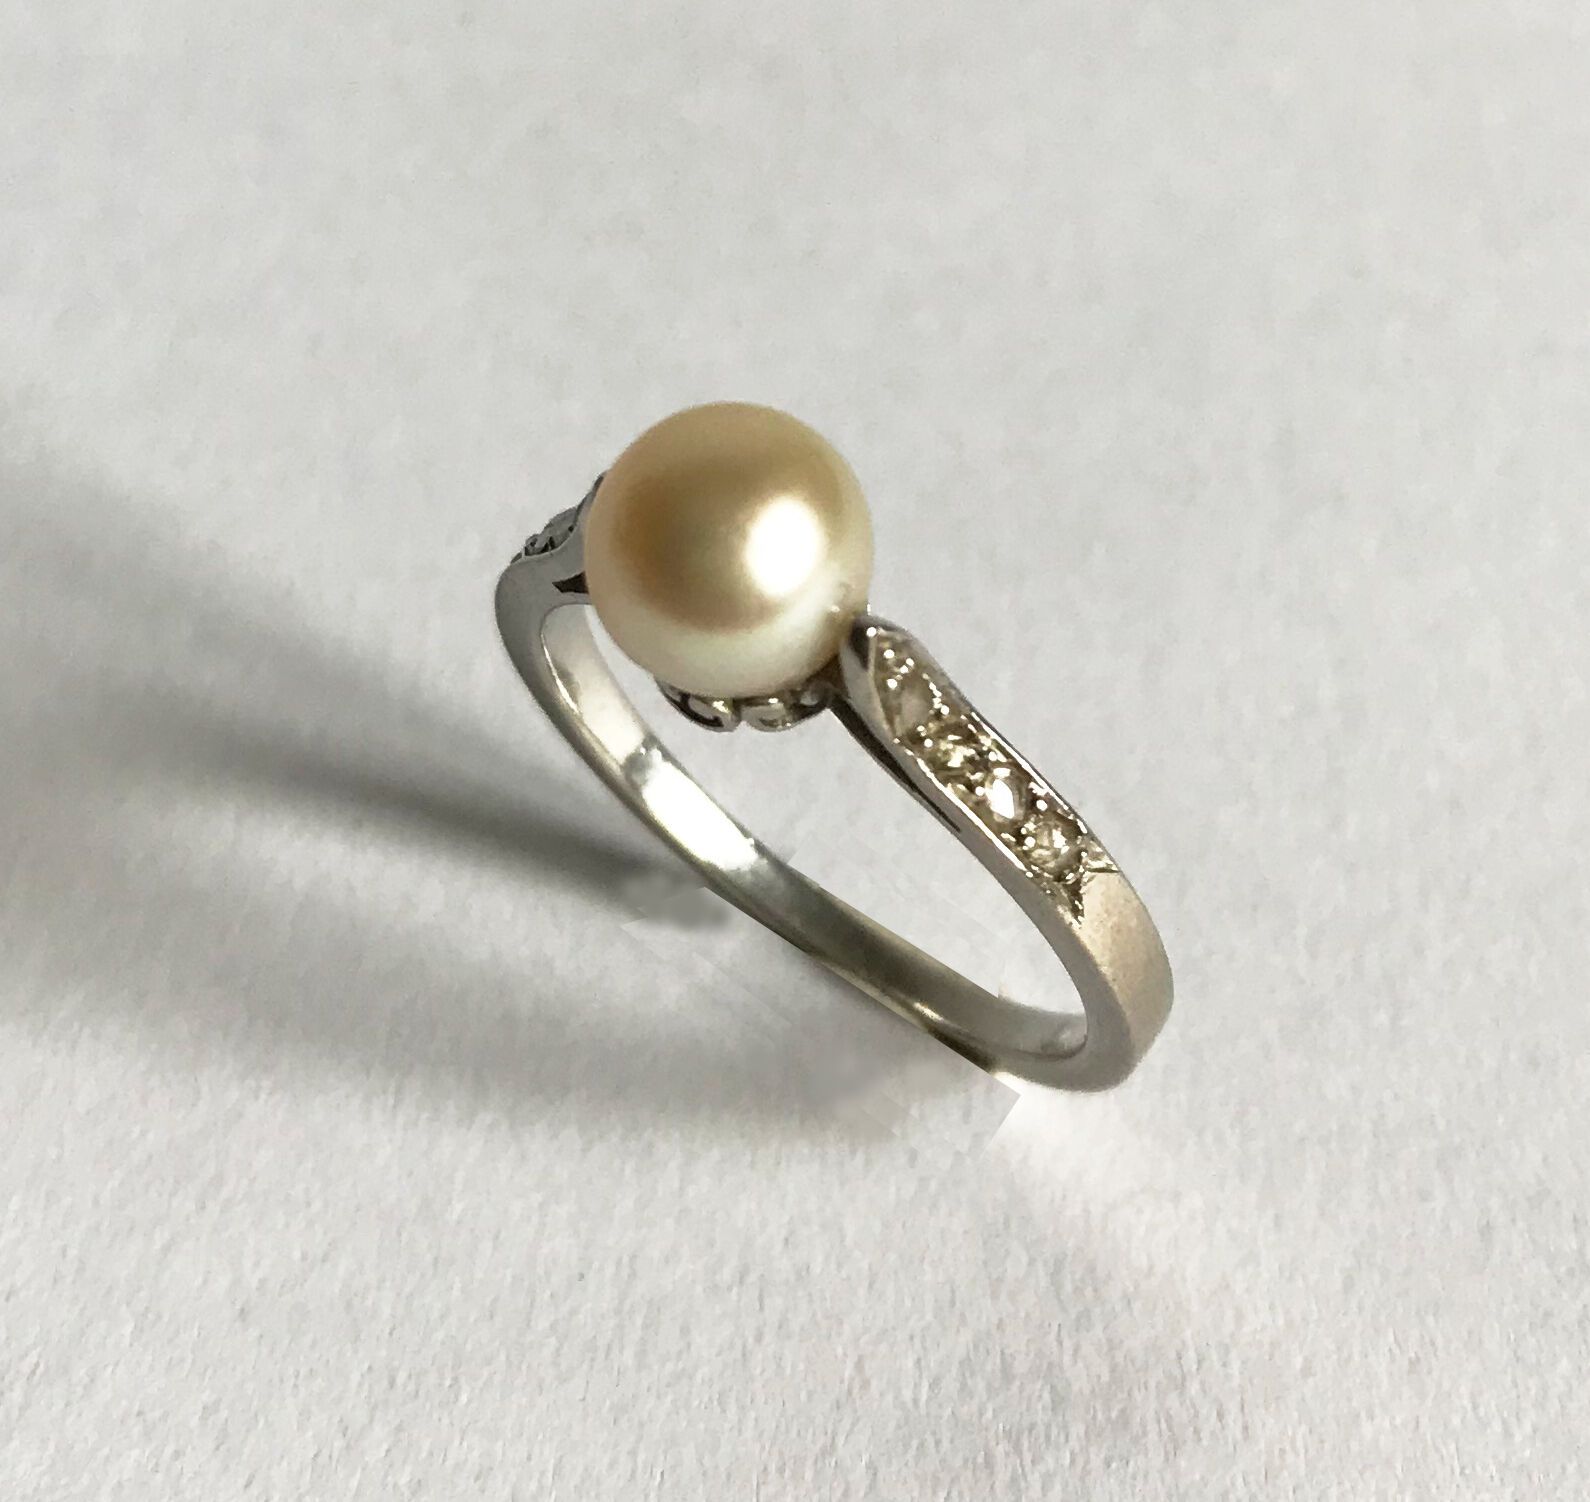 Null 镶嵌有珍珠和小钻石的白金戒指。约1920年
毛重：3.20克